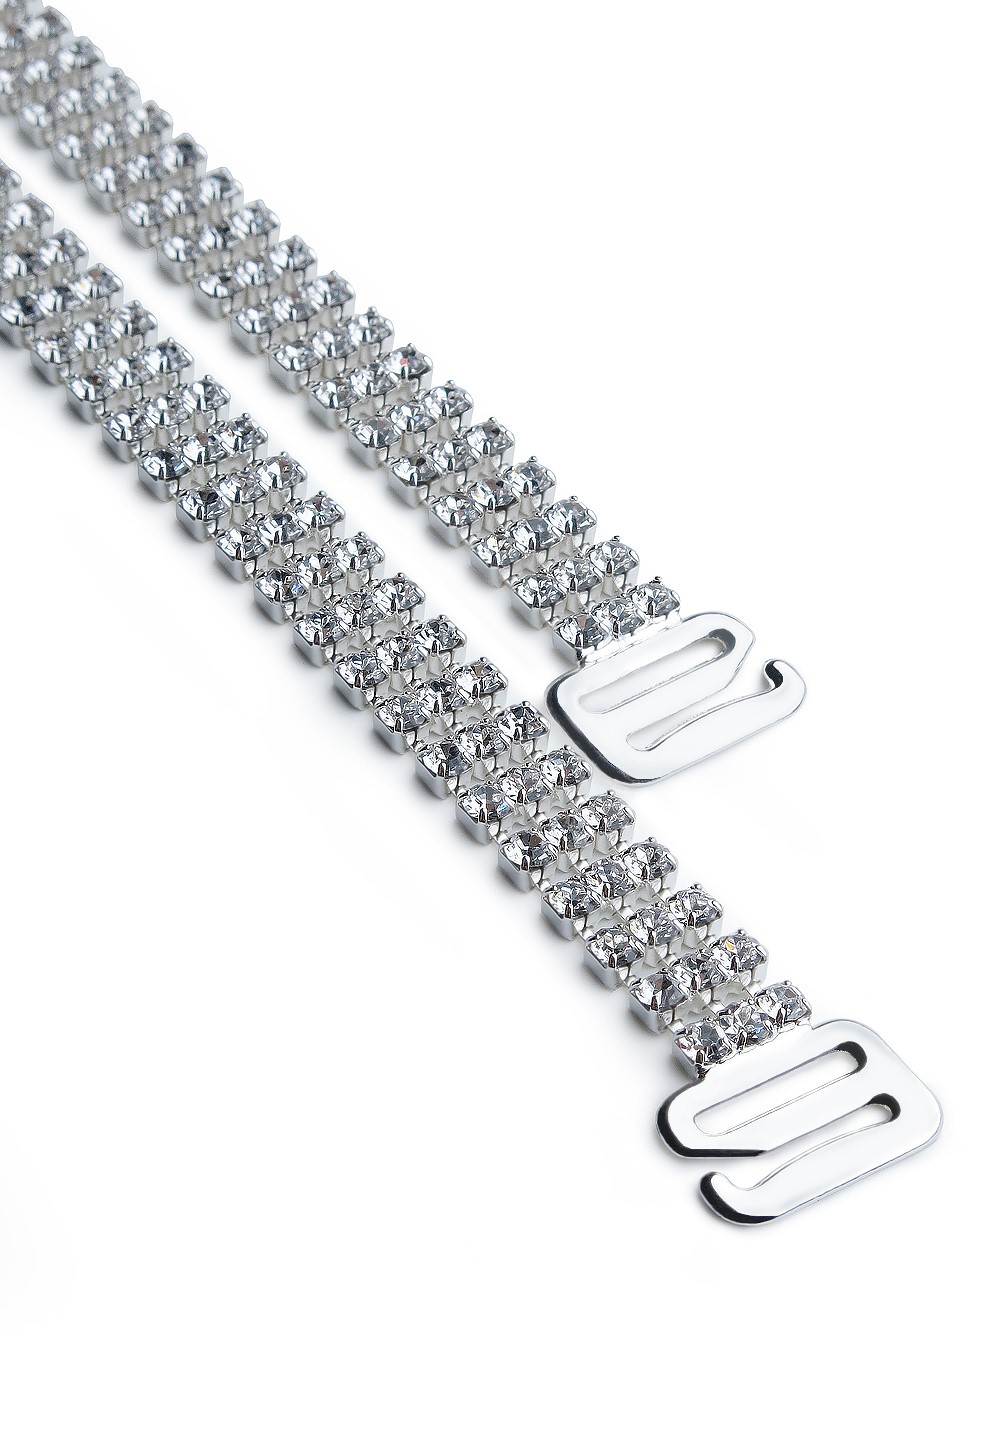 Rhinestone Bra Straps Crystal Bra Straps Adjustable Removable Fancy Bra  Strap Replacement for Bra Tops Dress (Silver)